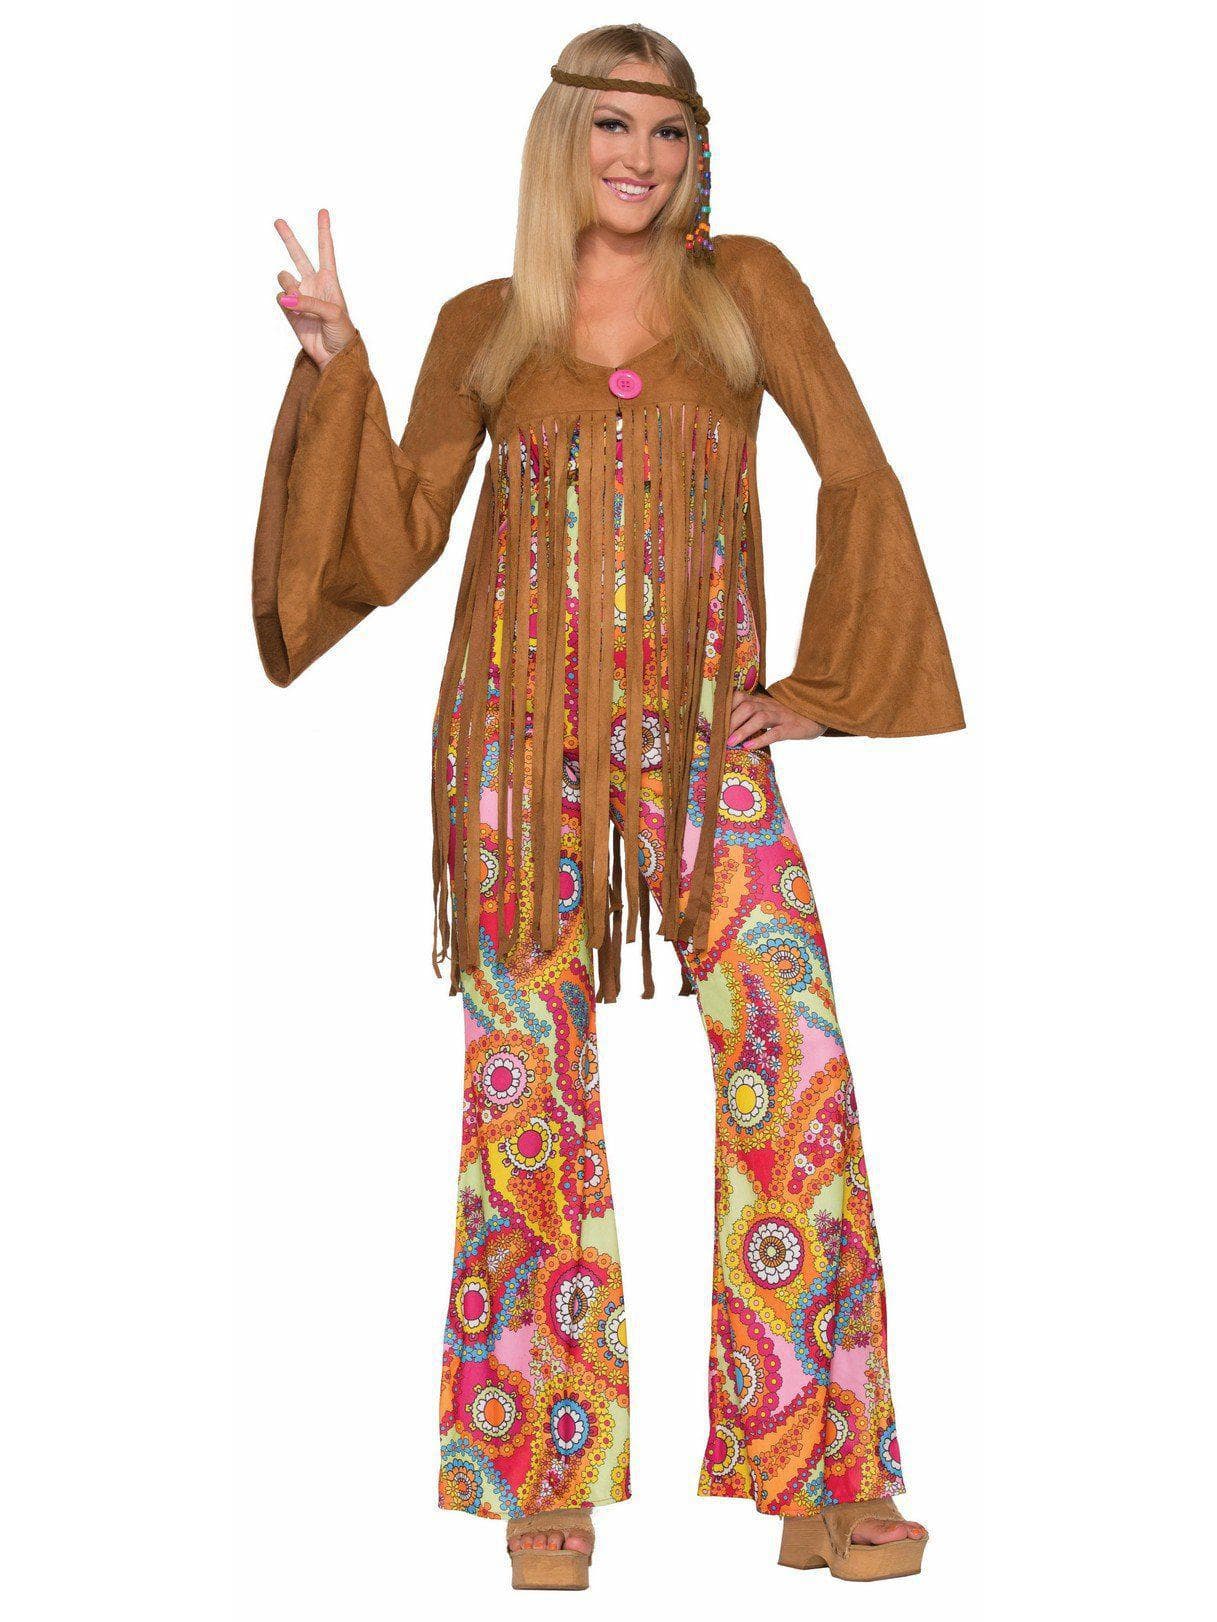 Adult Hippie Groovy Sweetie Costume - costumes.com